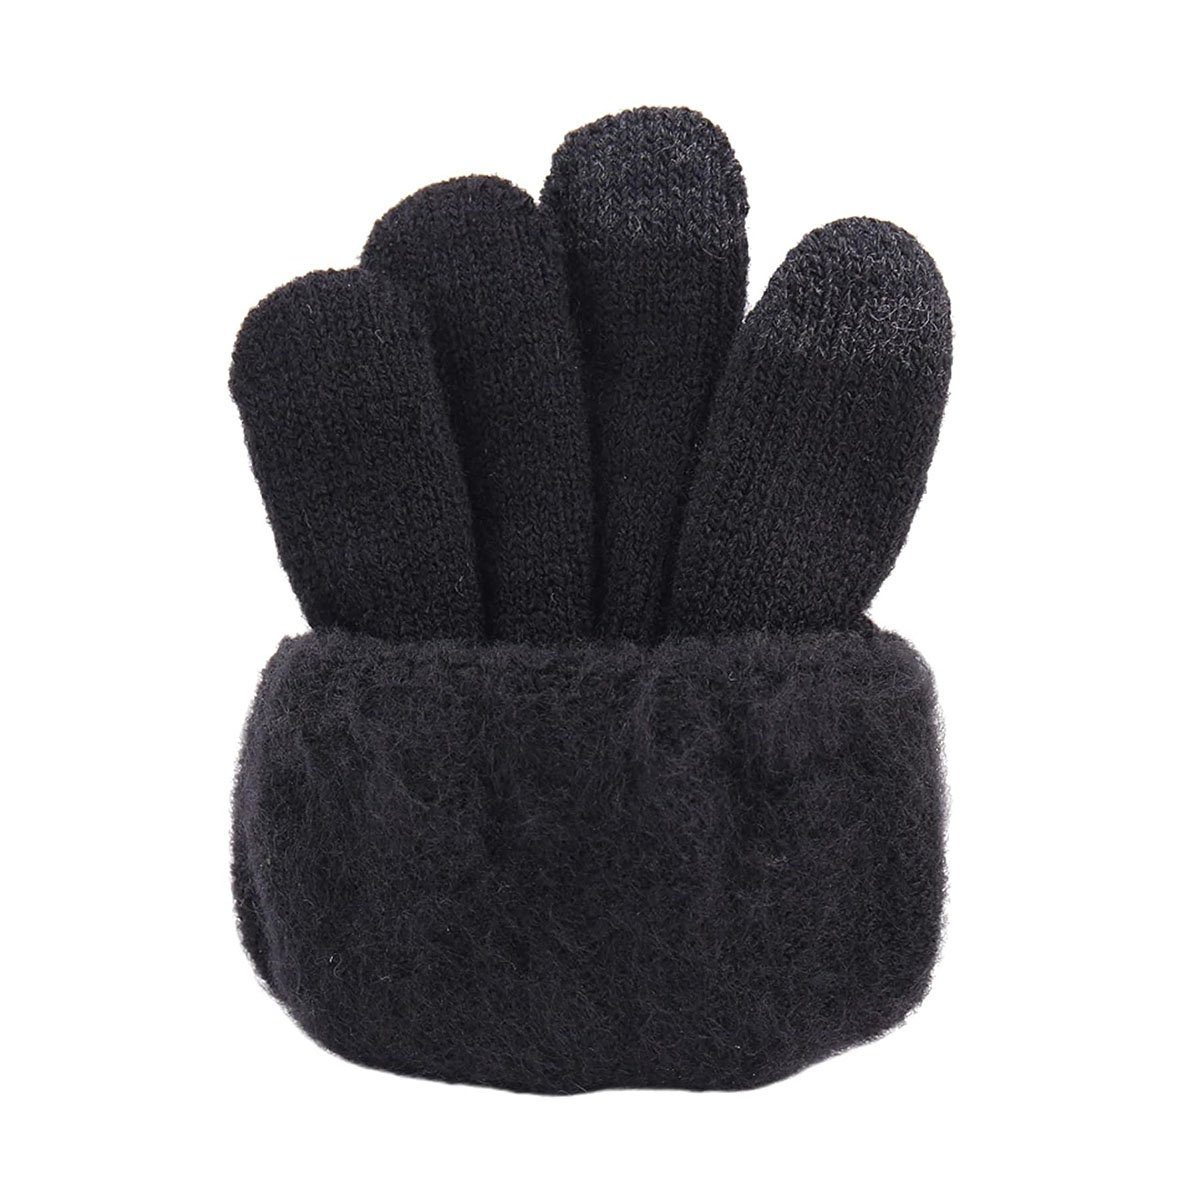 Schwarz(stil1) Damen Winter Touchscreen, Handschuhe Strickhandschuhe Strickhandschuhe GelldG Thermo Herren